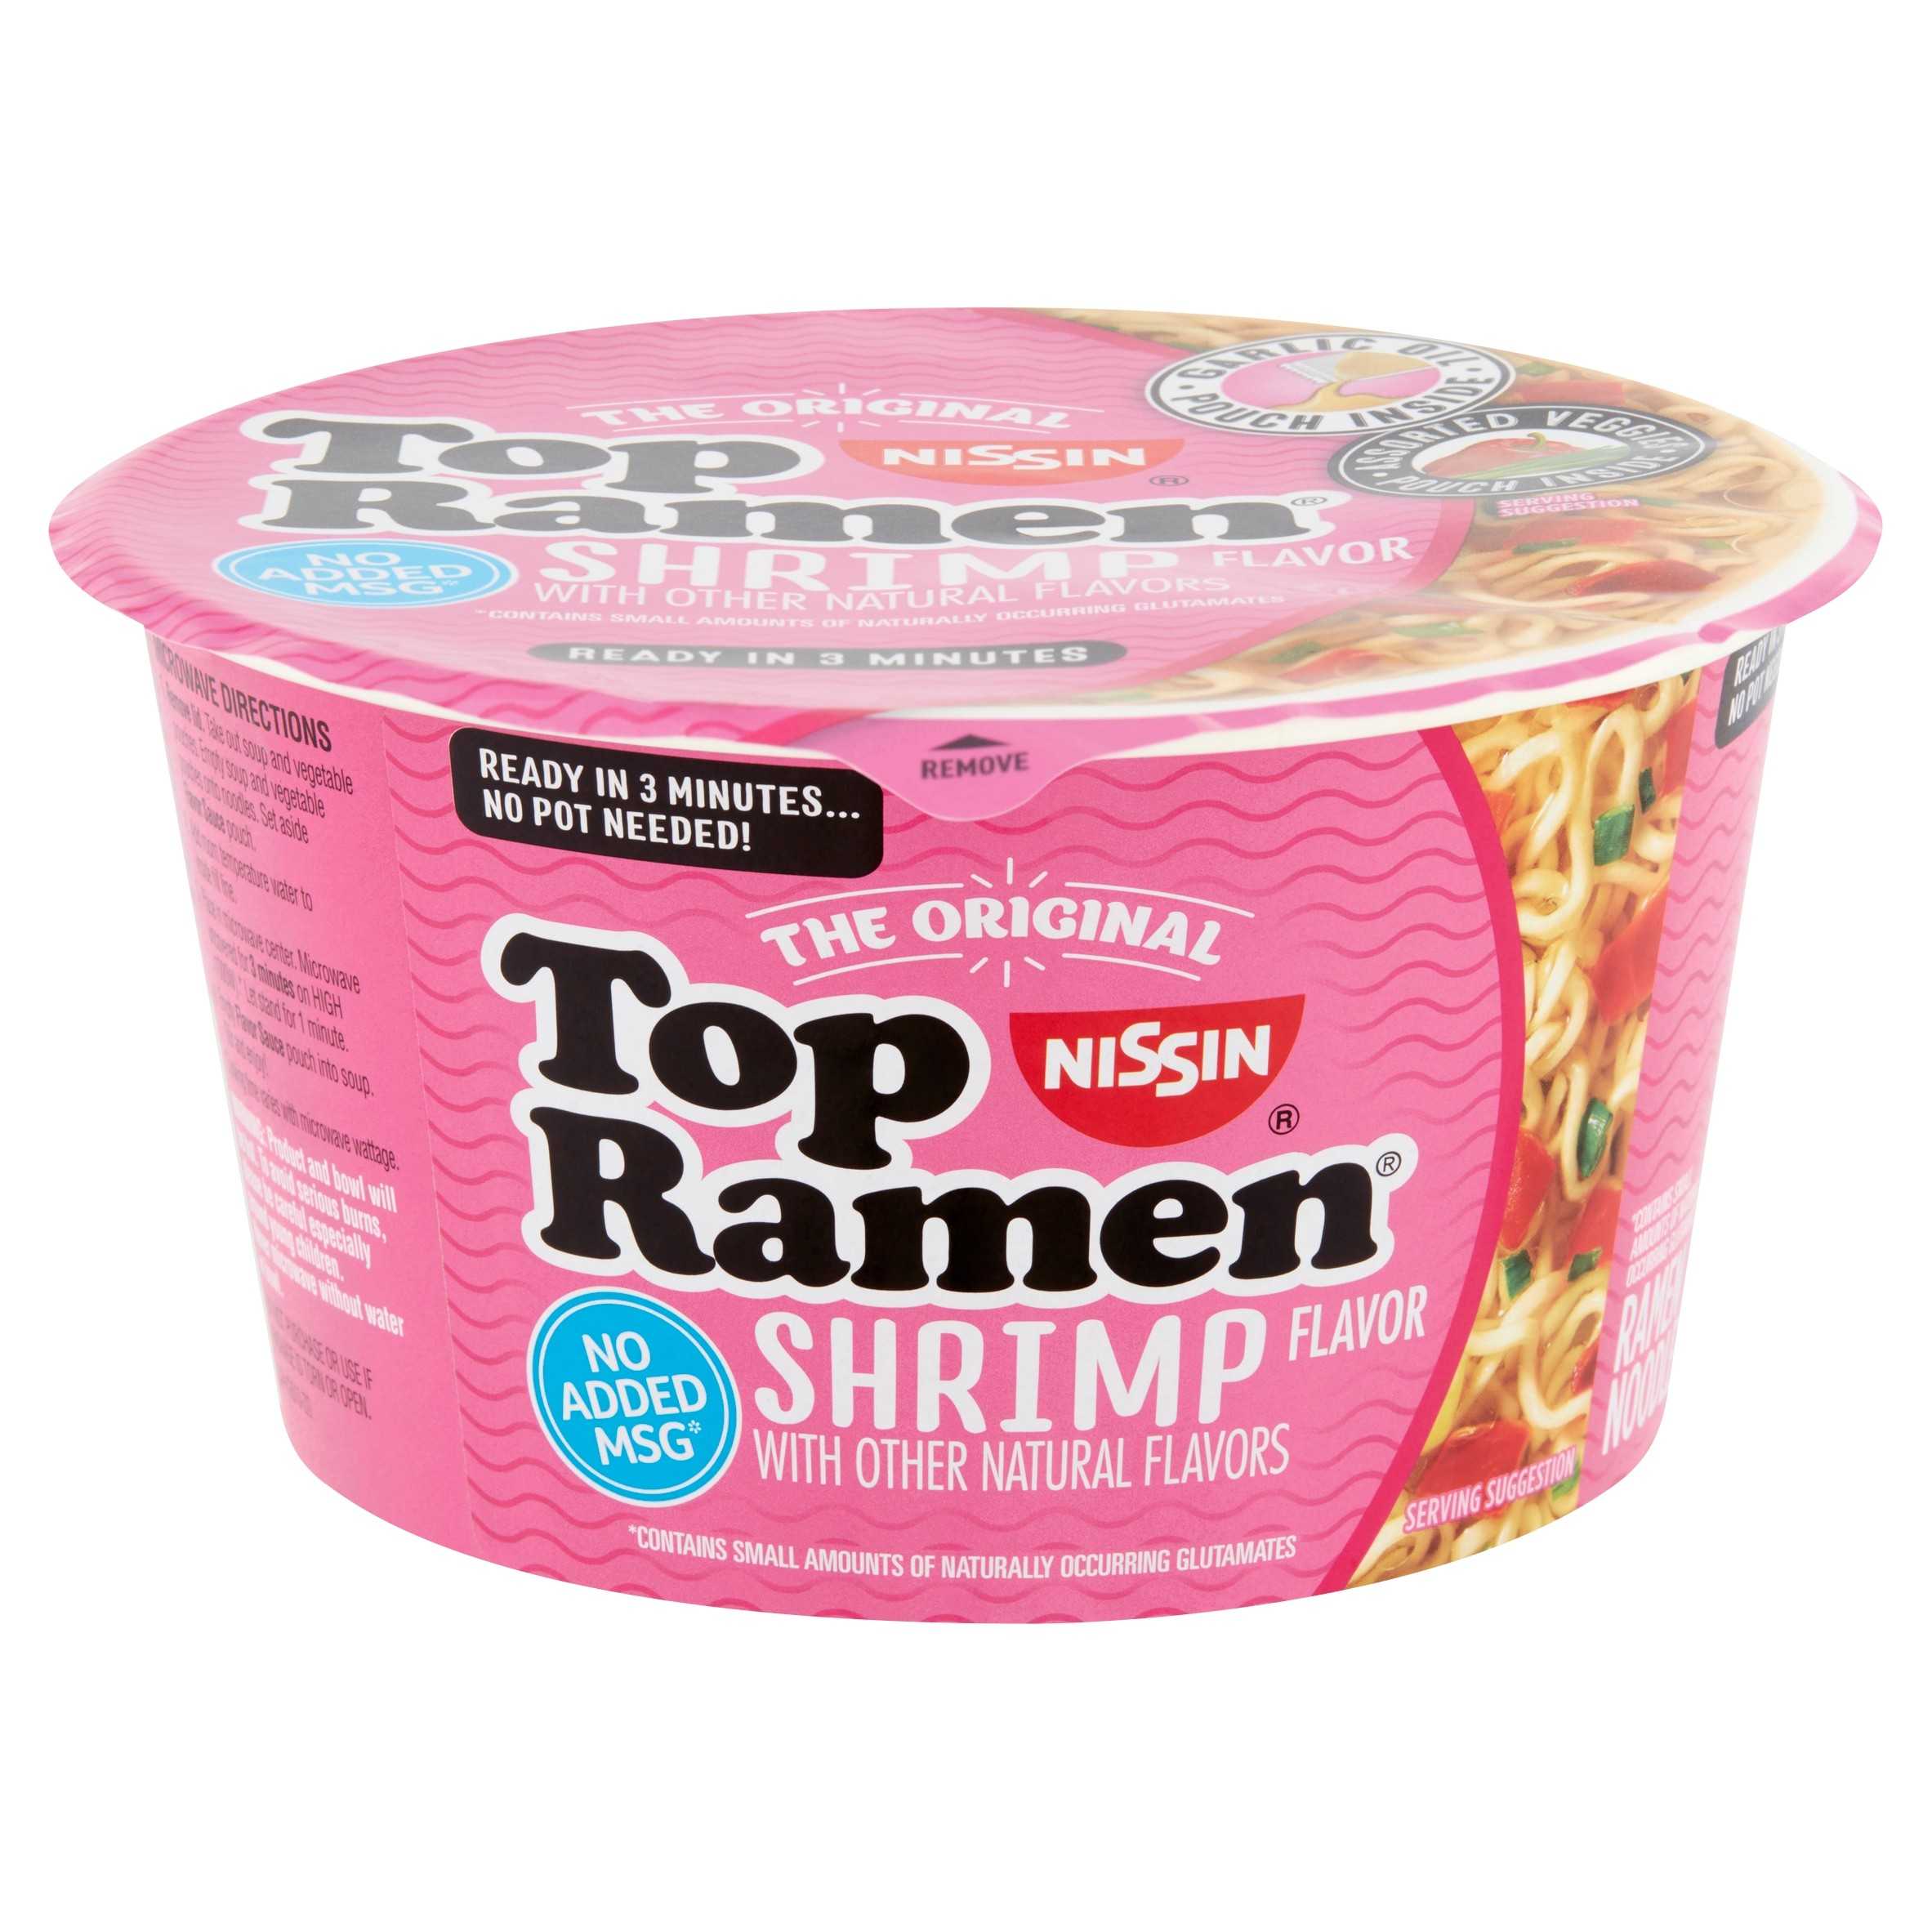 Nissin The Original Top Ramen Shrimp Flavor Ramen Noodle Soup, 3.28 oz